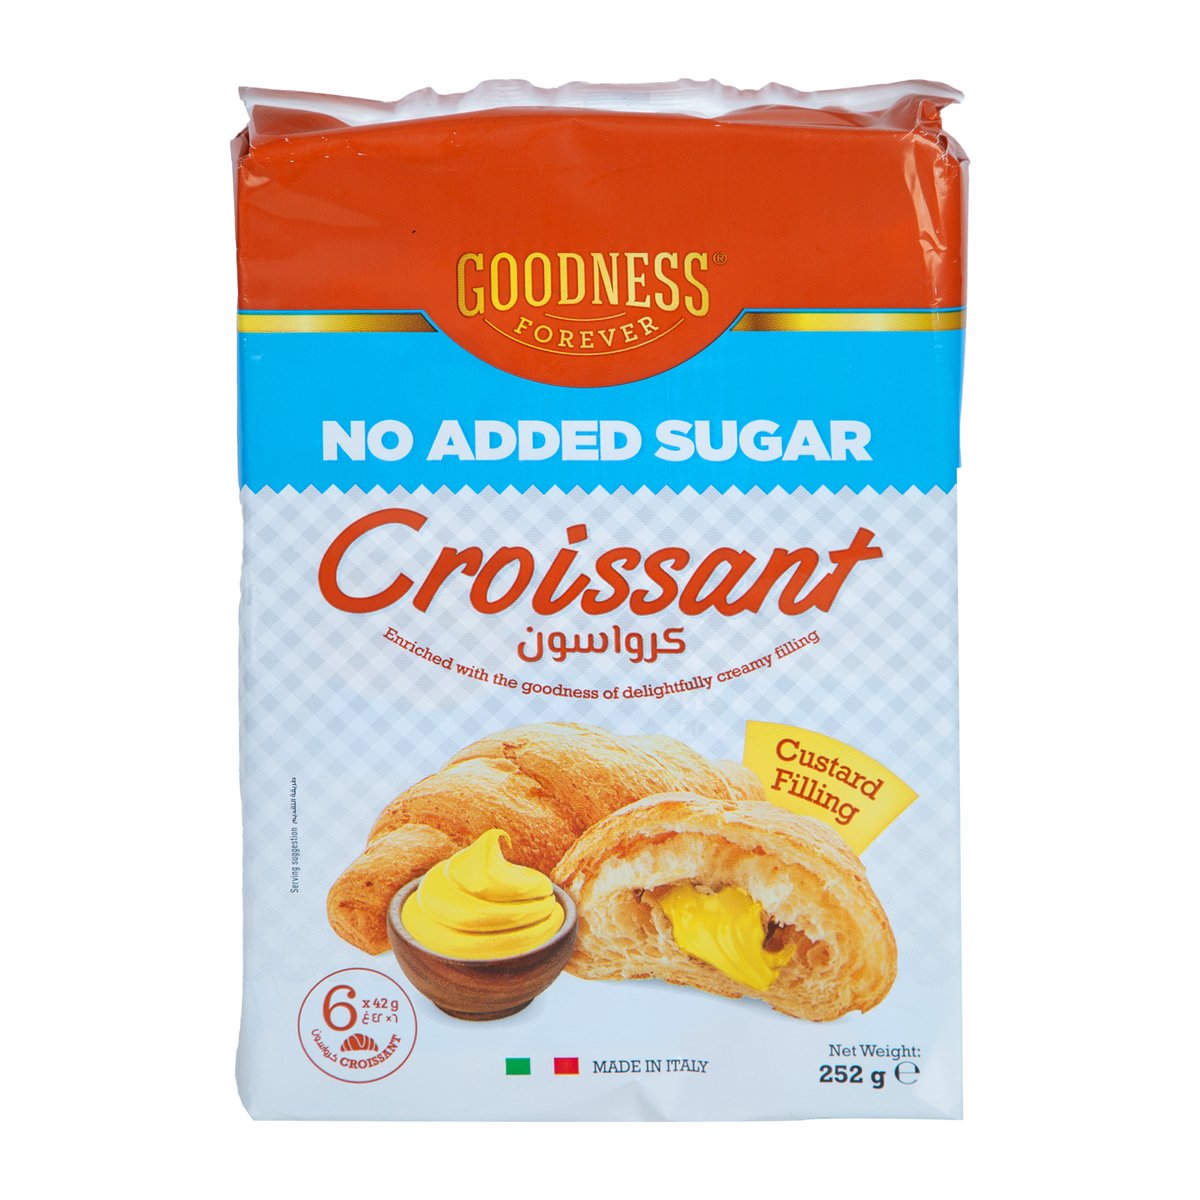 Goodness Forever Custard Croissant No Added Sugar 42 g